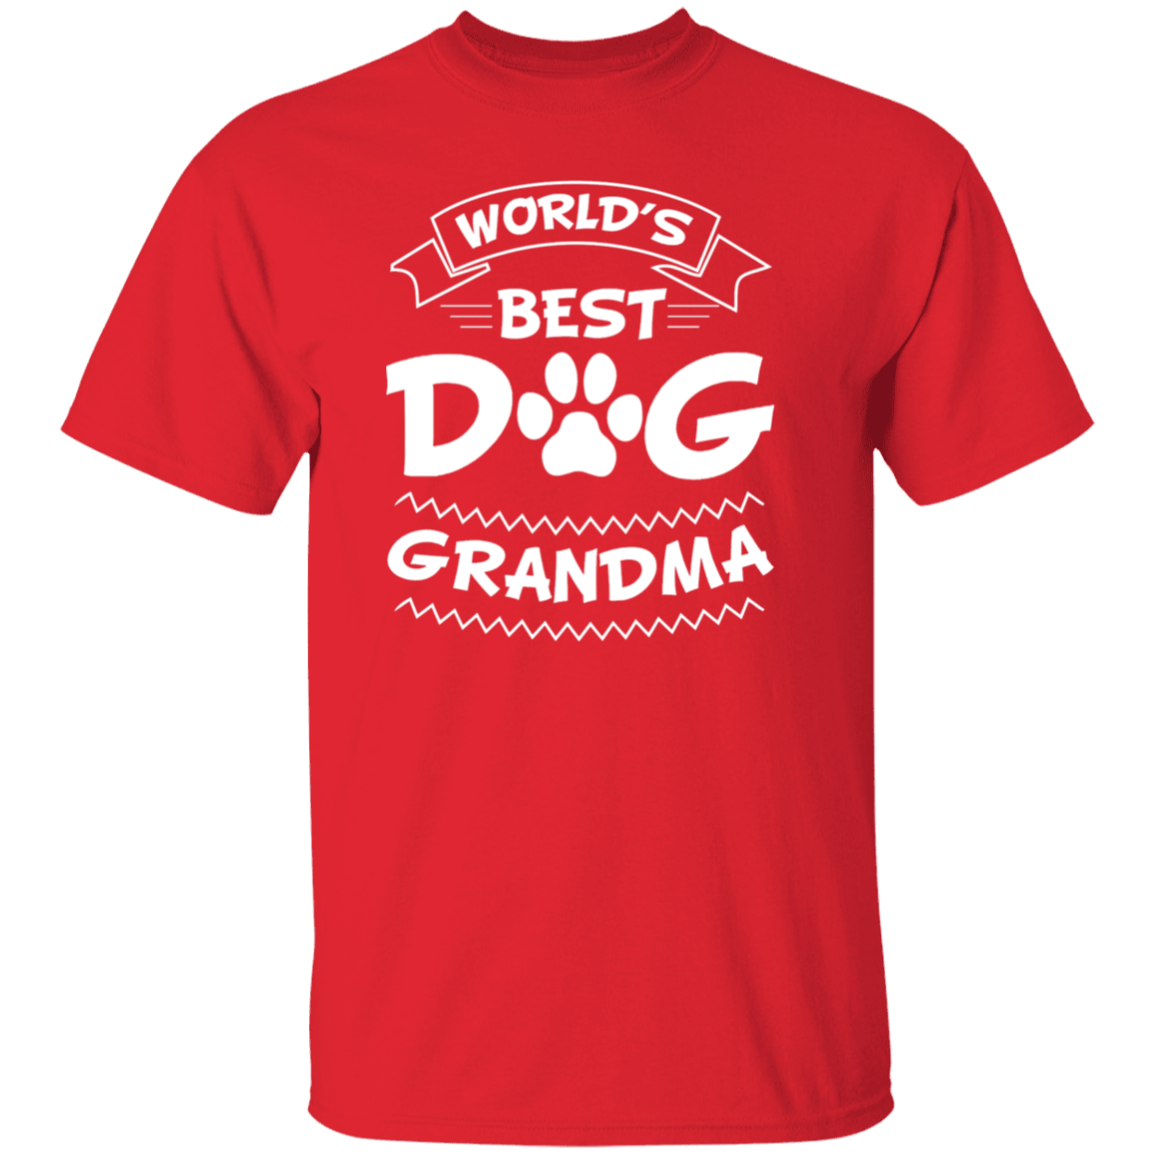 World's Best Dog Grandma - T Shirt.